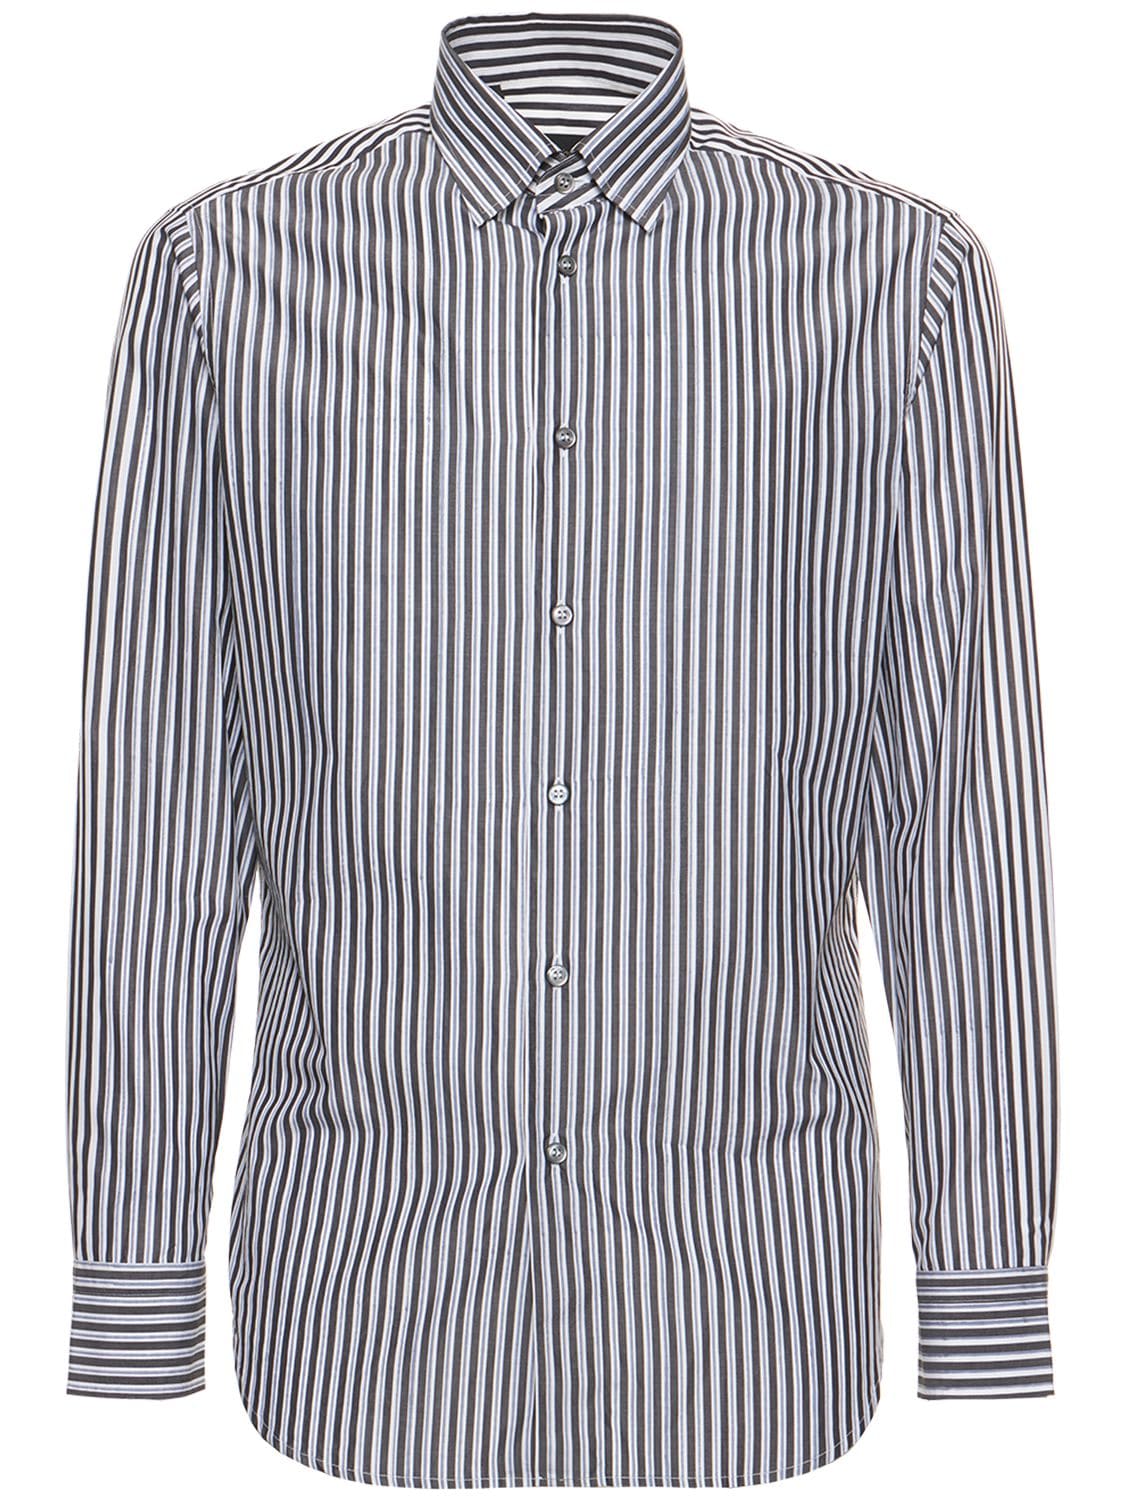 BRIONI Striped Cotton Shirt